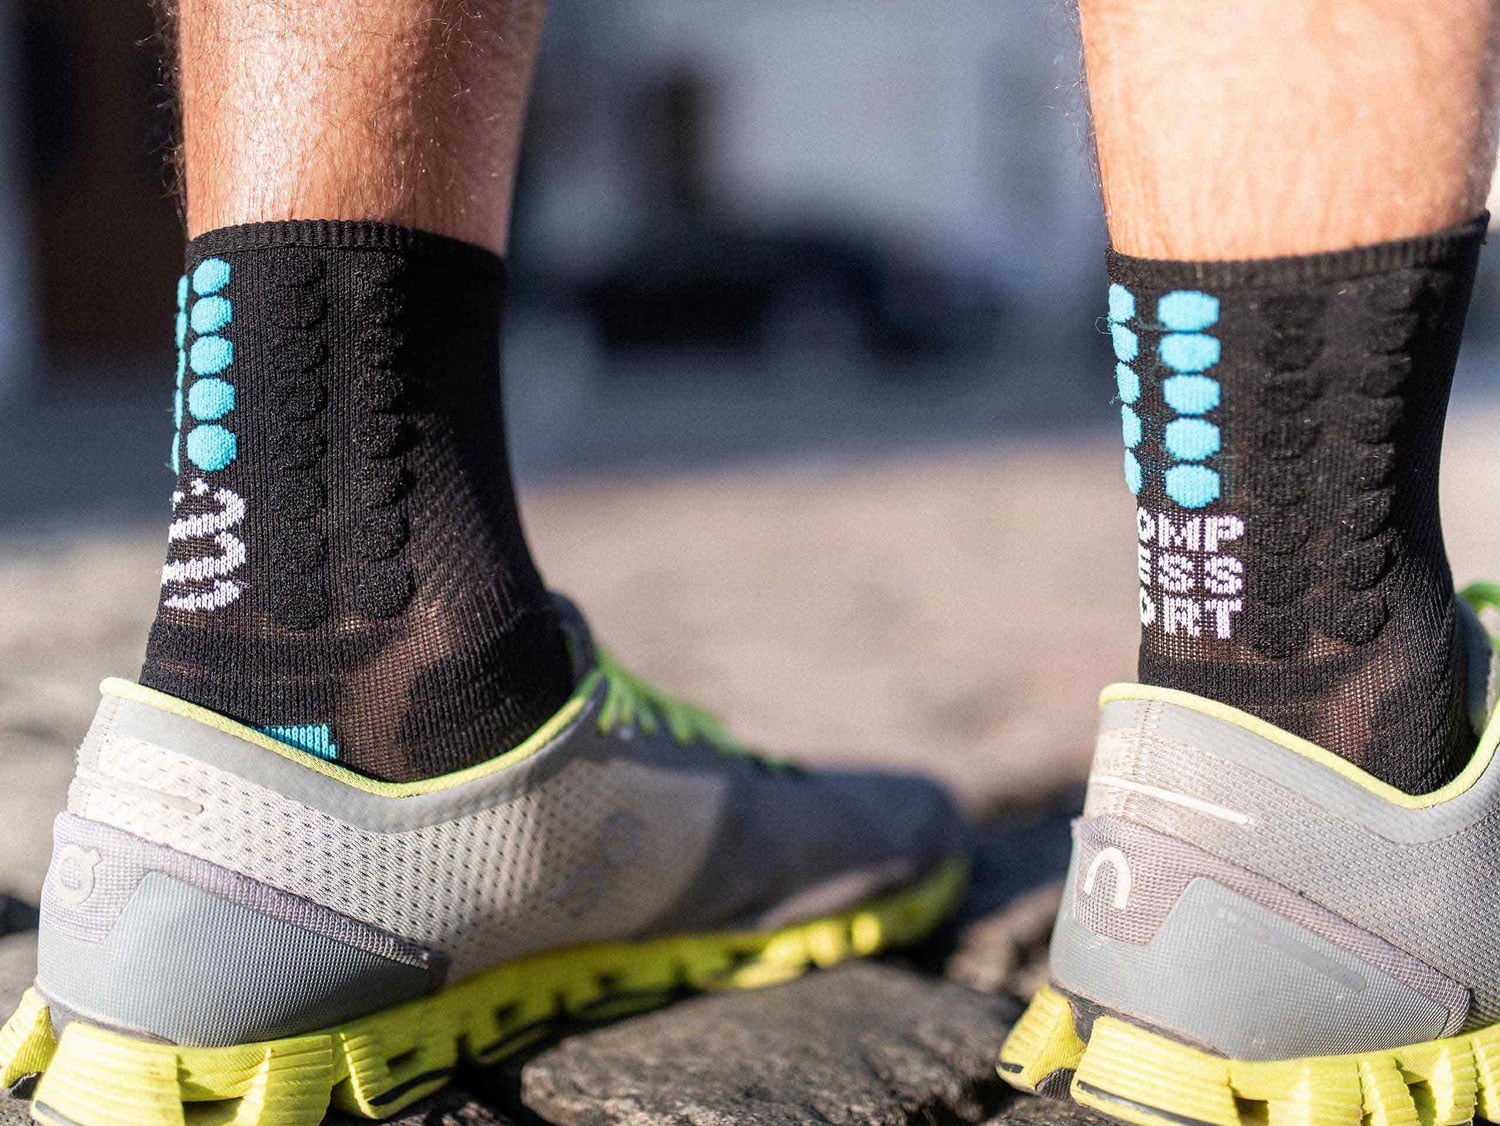 vo chay bo compressport pro marathon socks 9 Vớ chạy bộ đường dài Compressport Pro Marathon Socks - YCB.vn